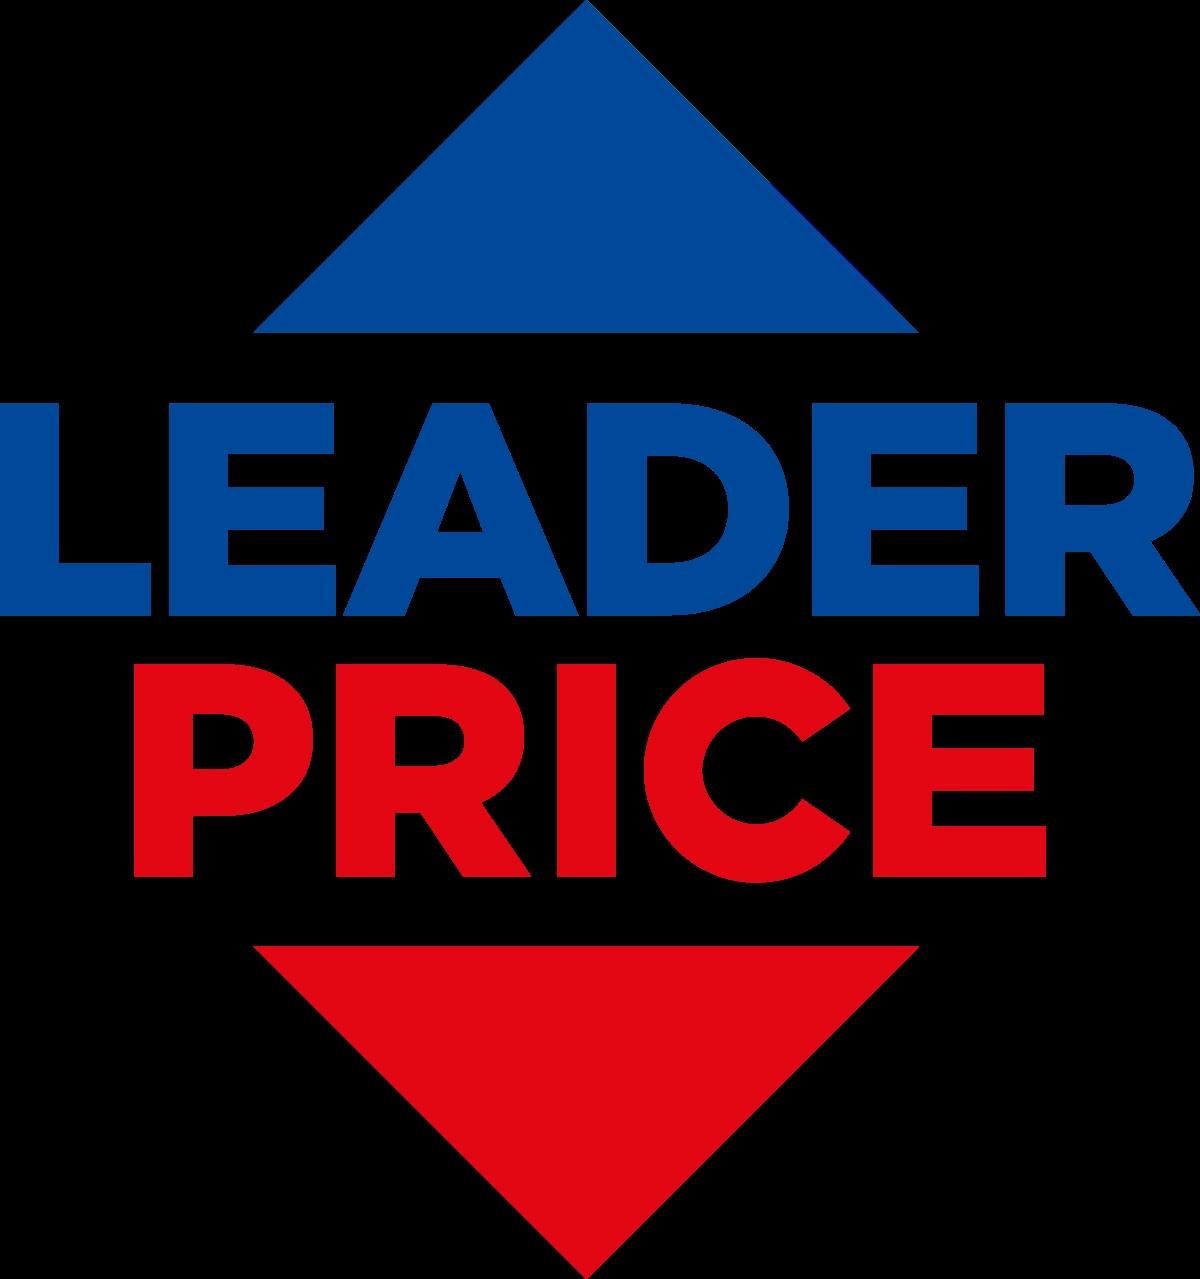 Leader Price Le Plessis Robinson